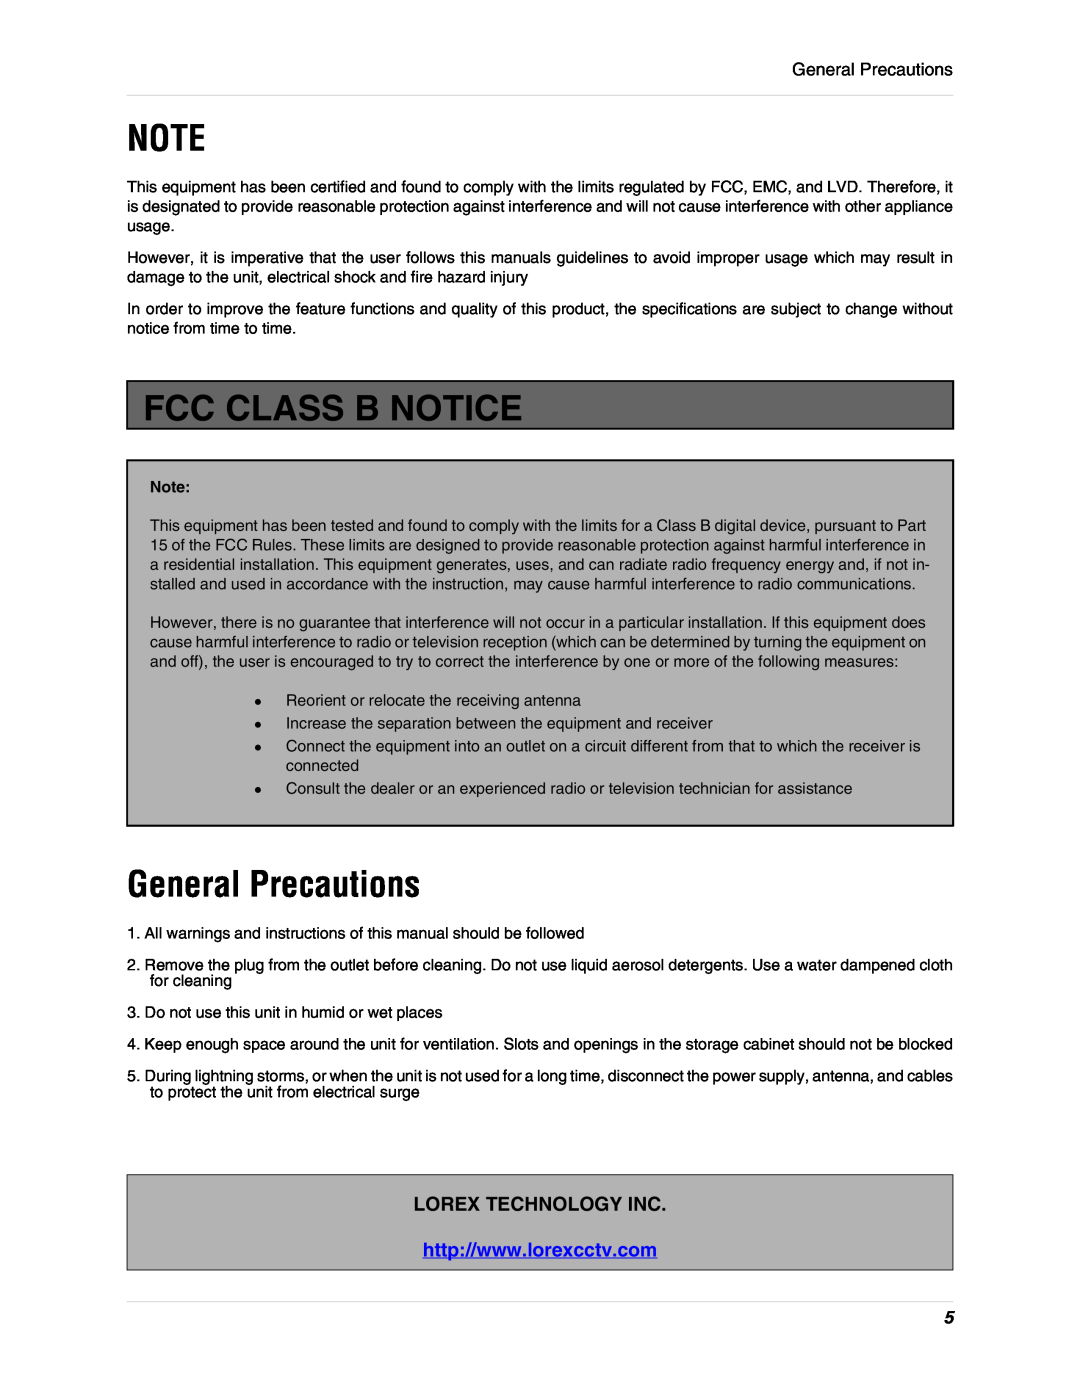 LOREX Technology SHS-4QM instruction manual Fcc Class B Notice, General Precautions, Lorex Technology Inc 